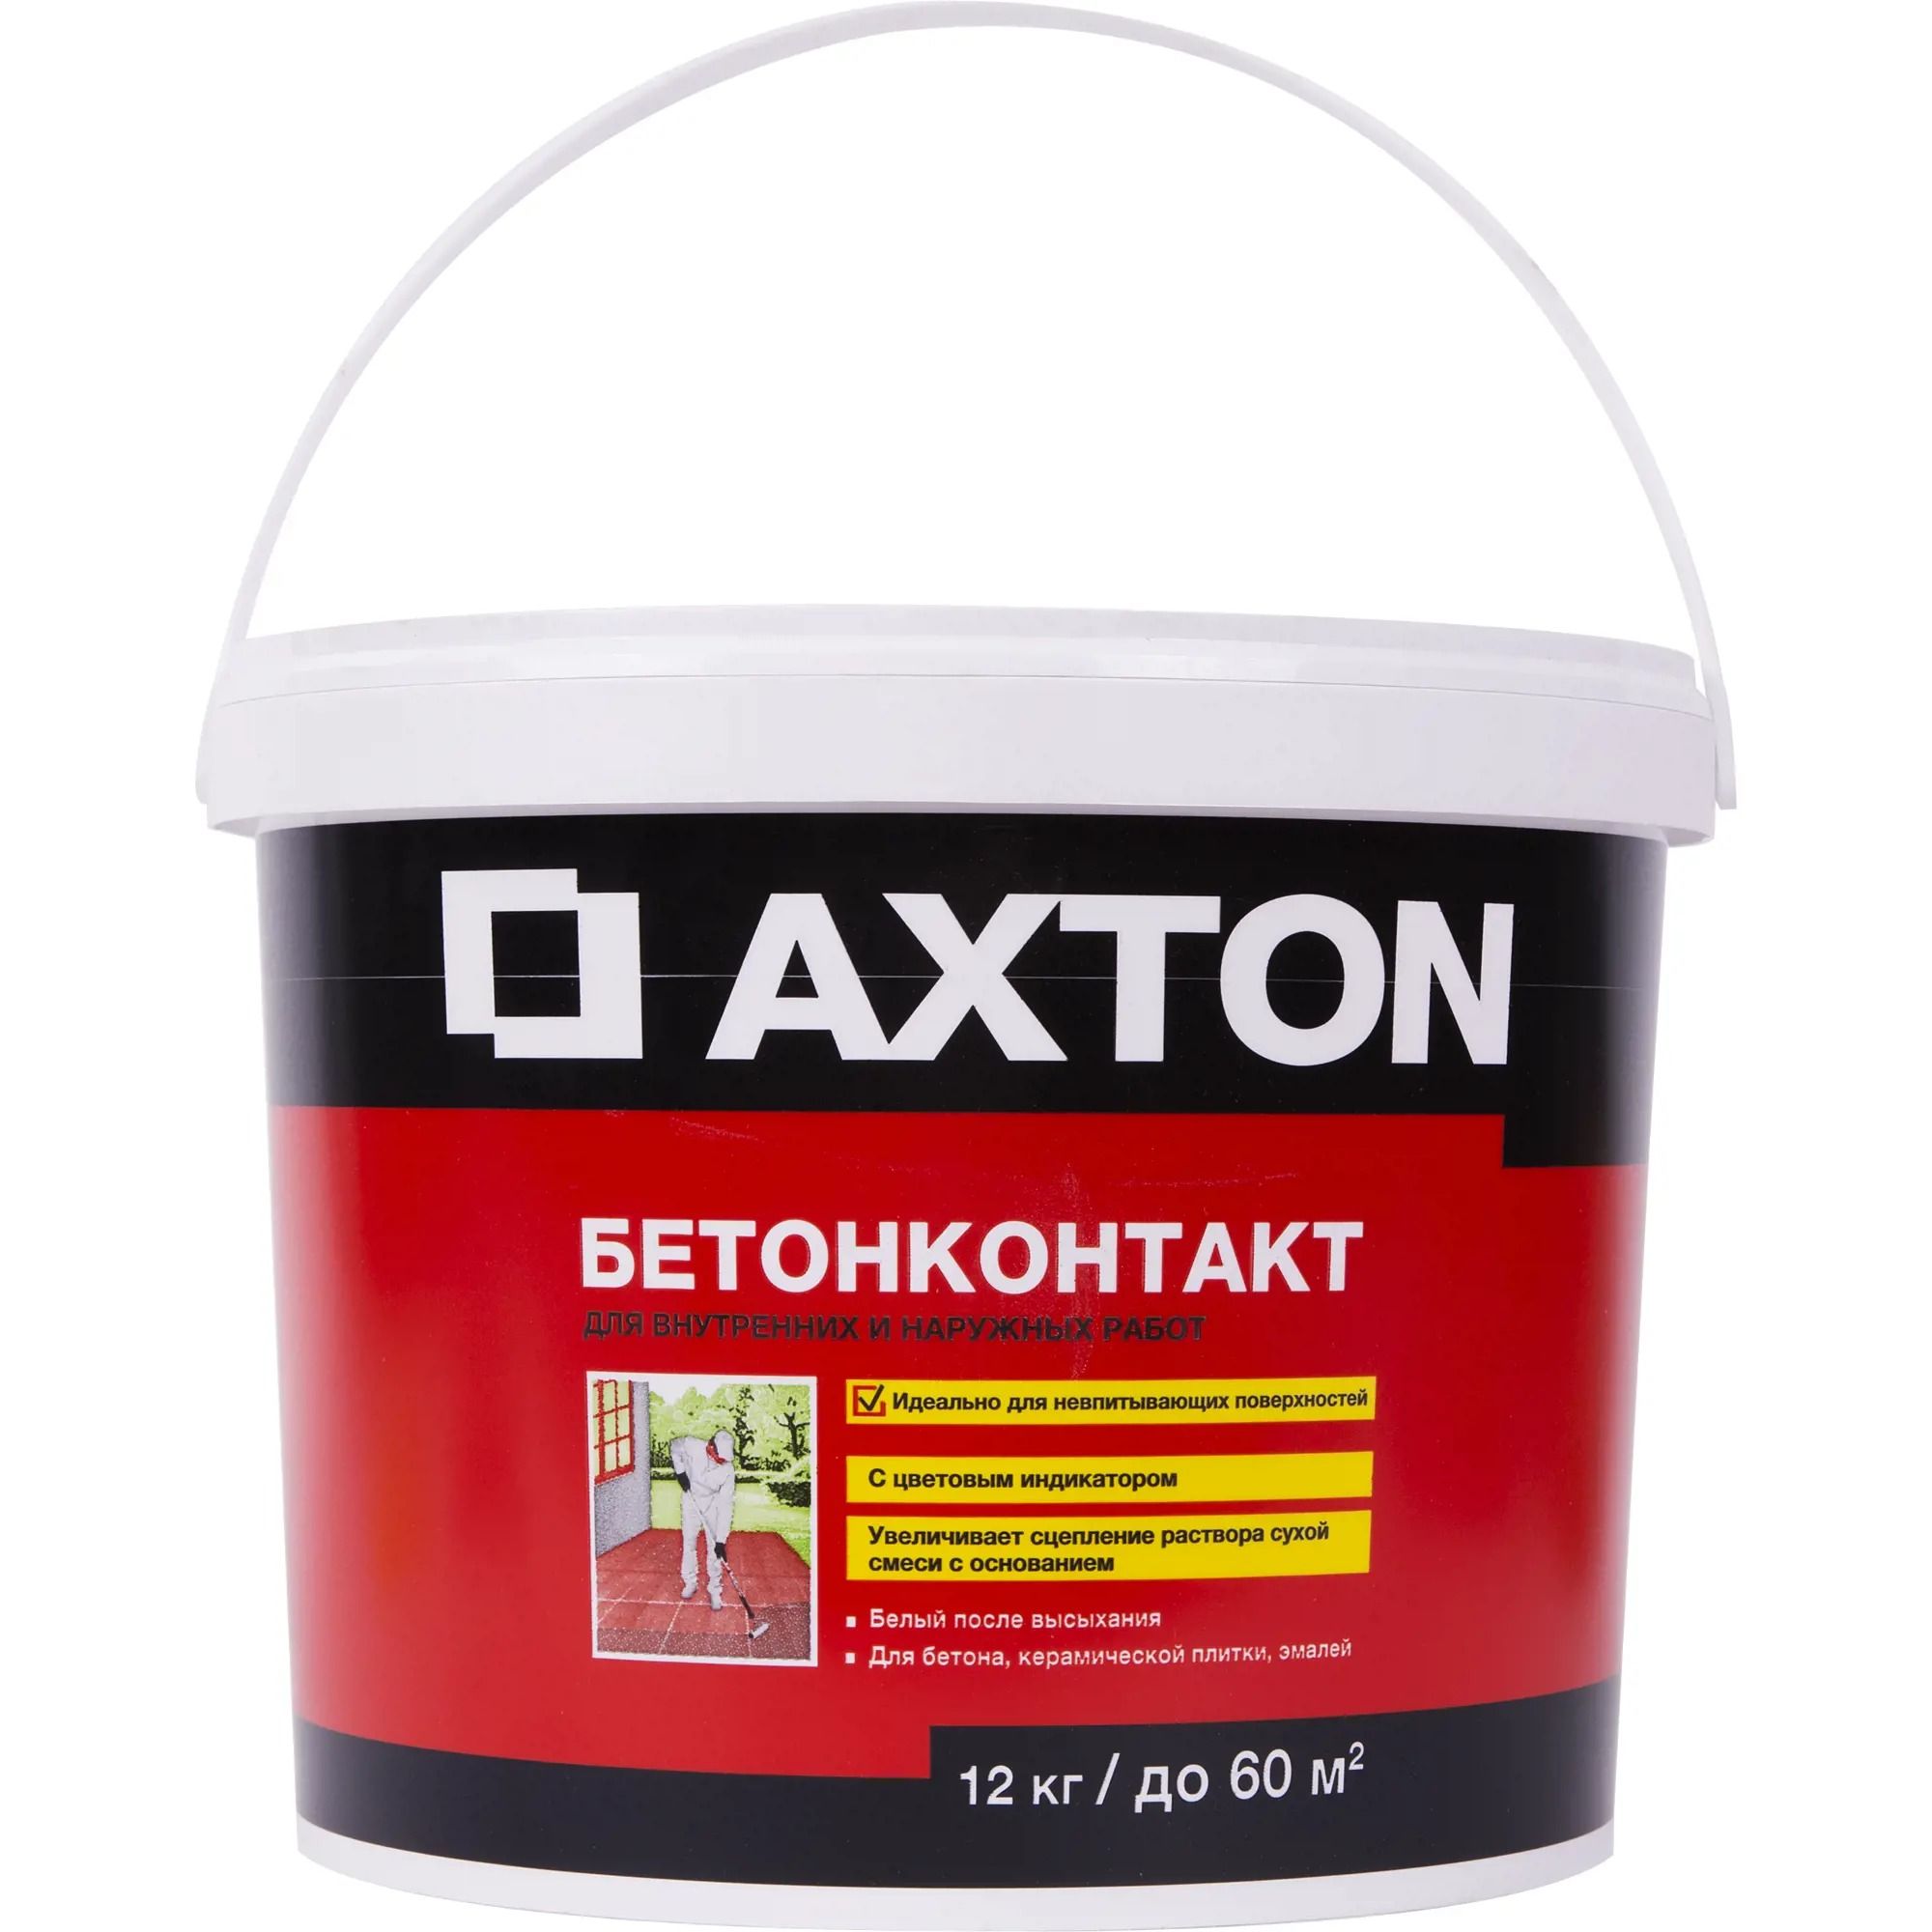 12 Axton бетоноконтакт